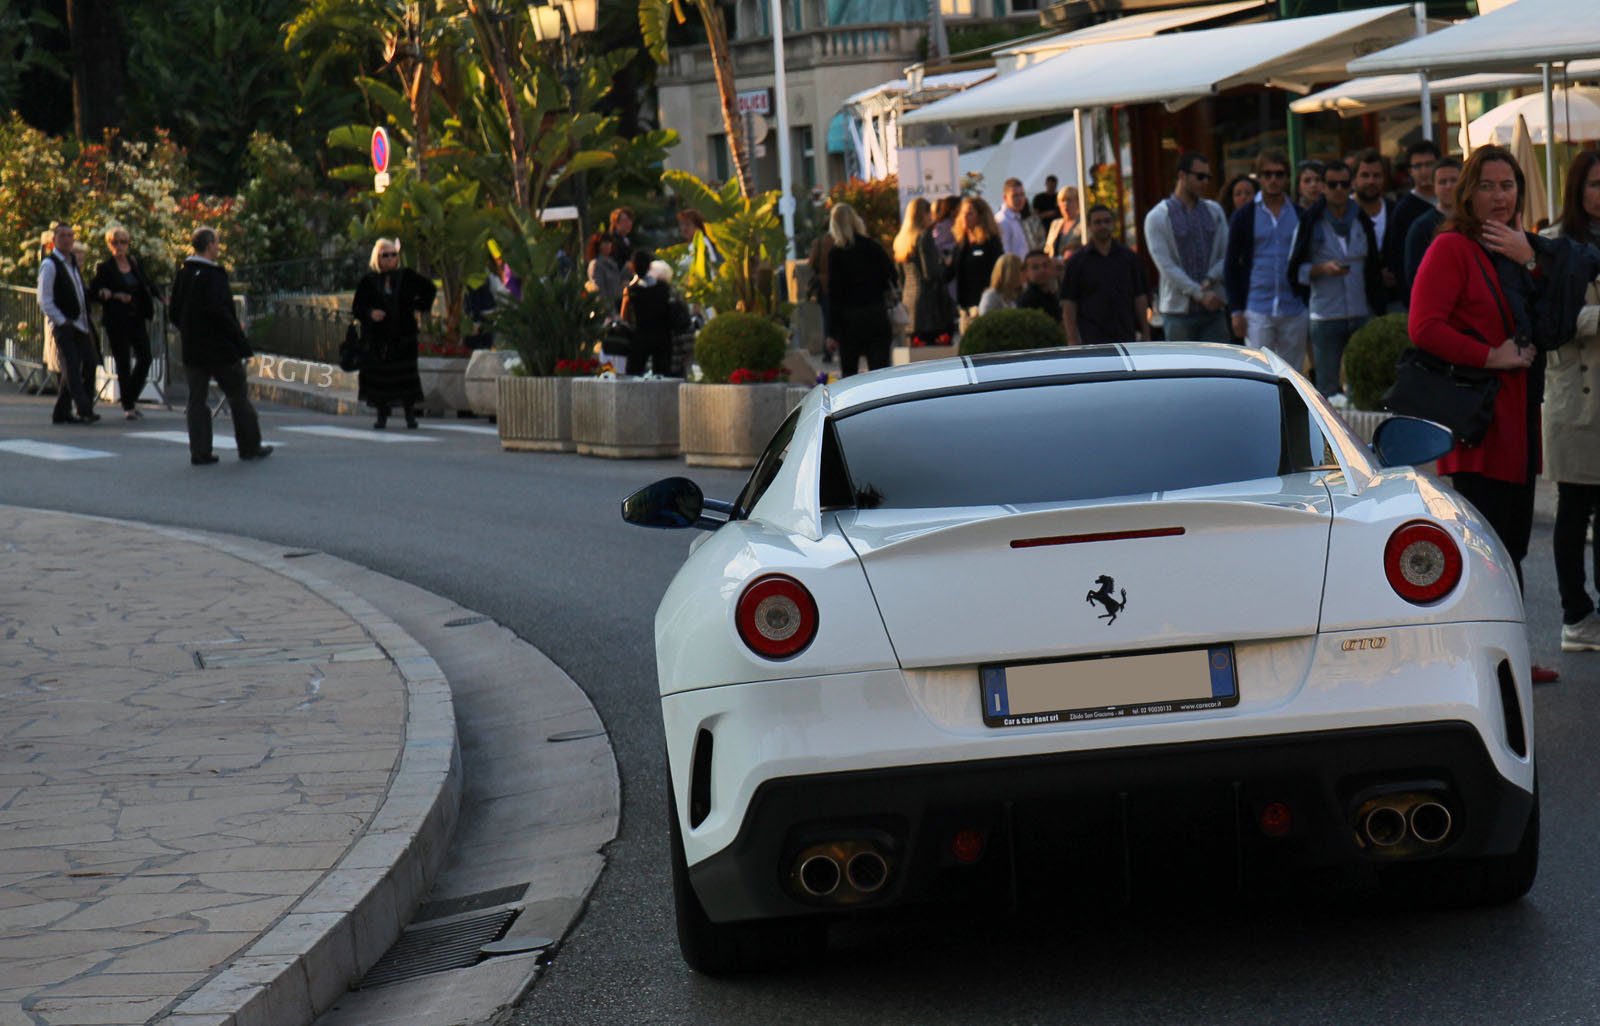 599, Ferrari, Gto, Cars, Supercars, Coupe, Blanc, White Wallpaper